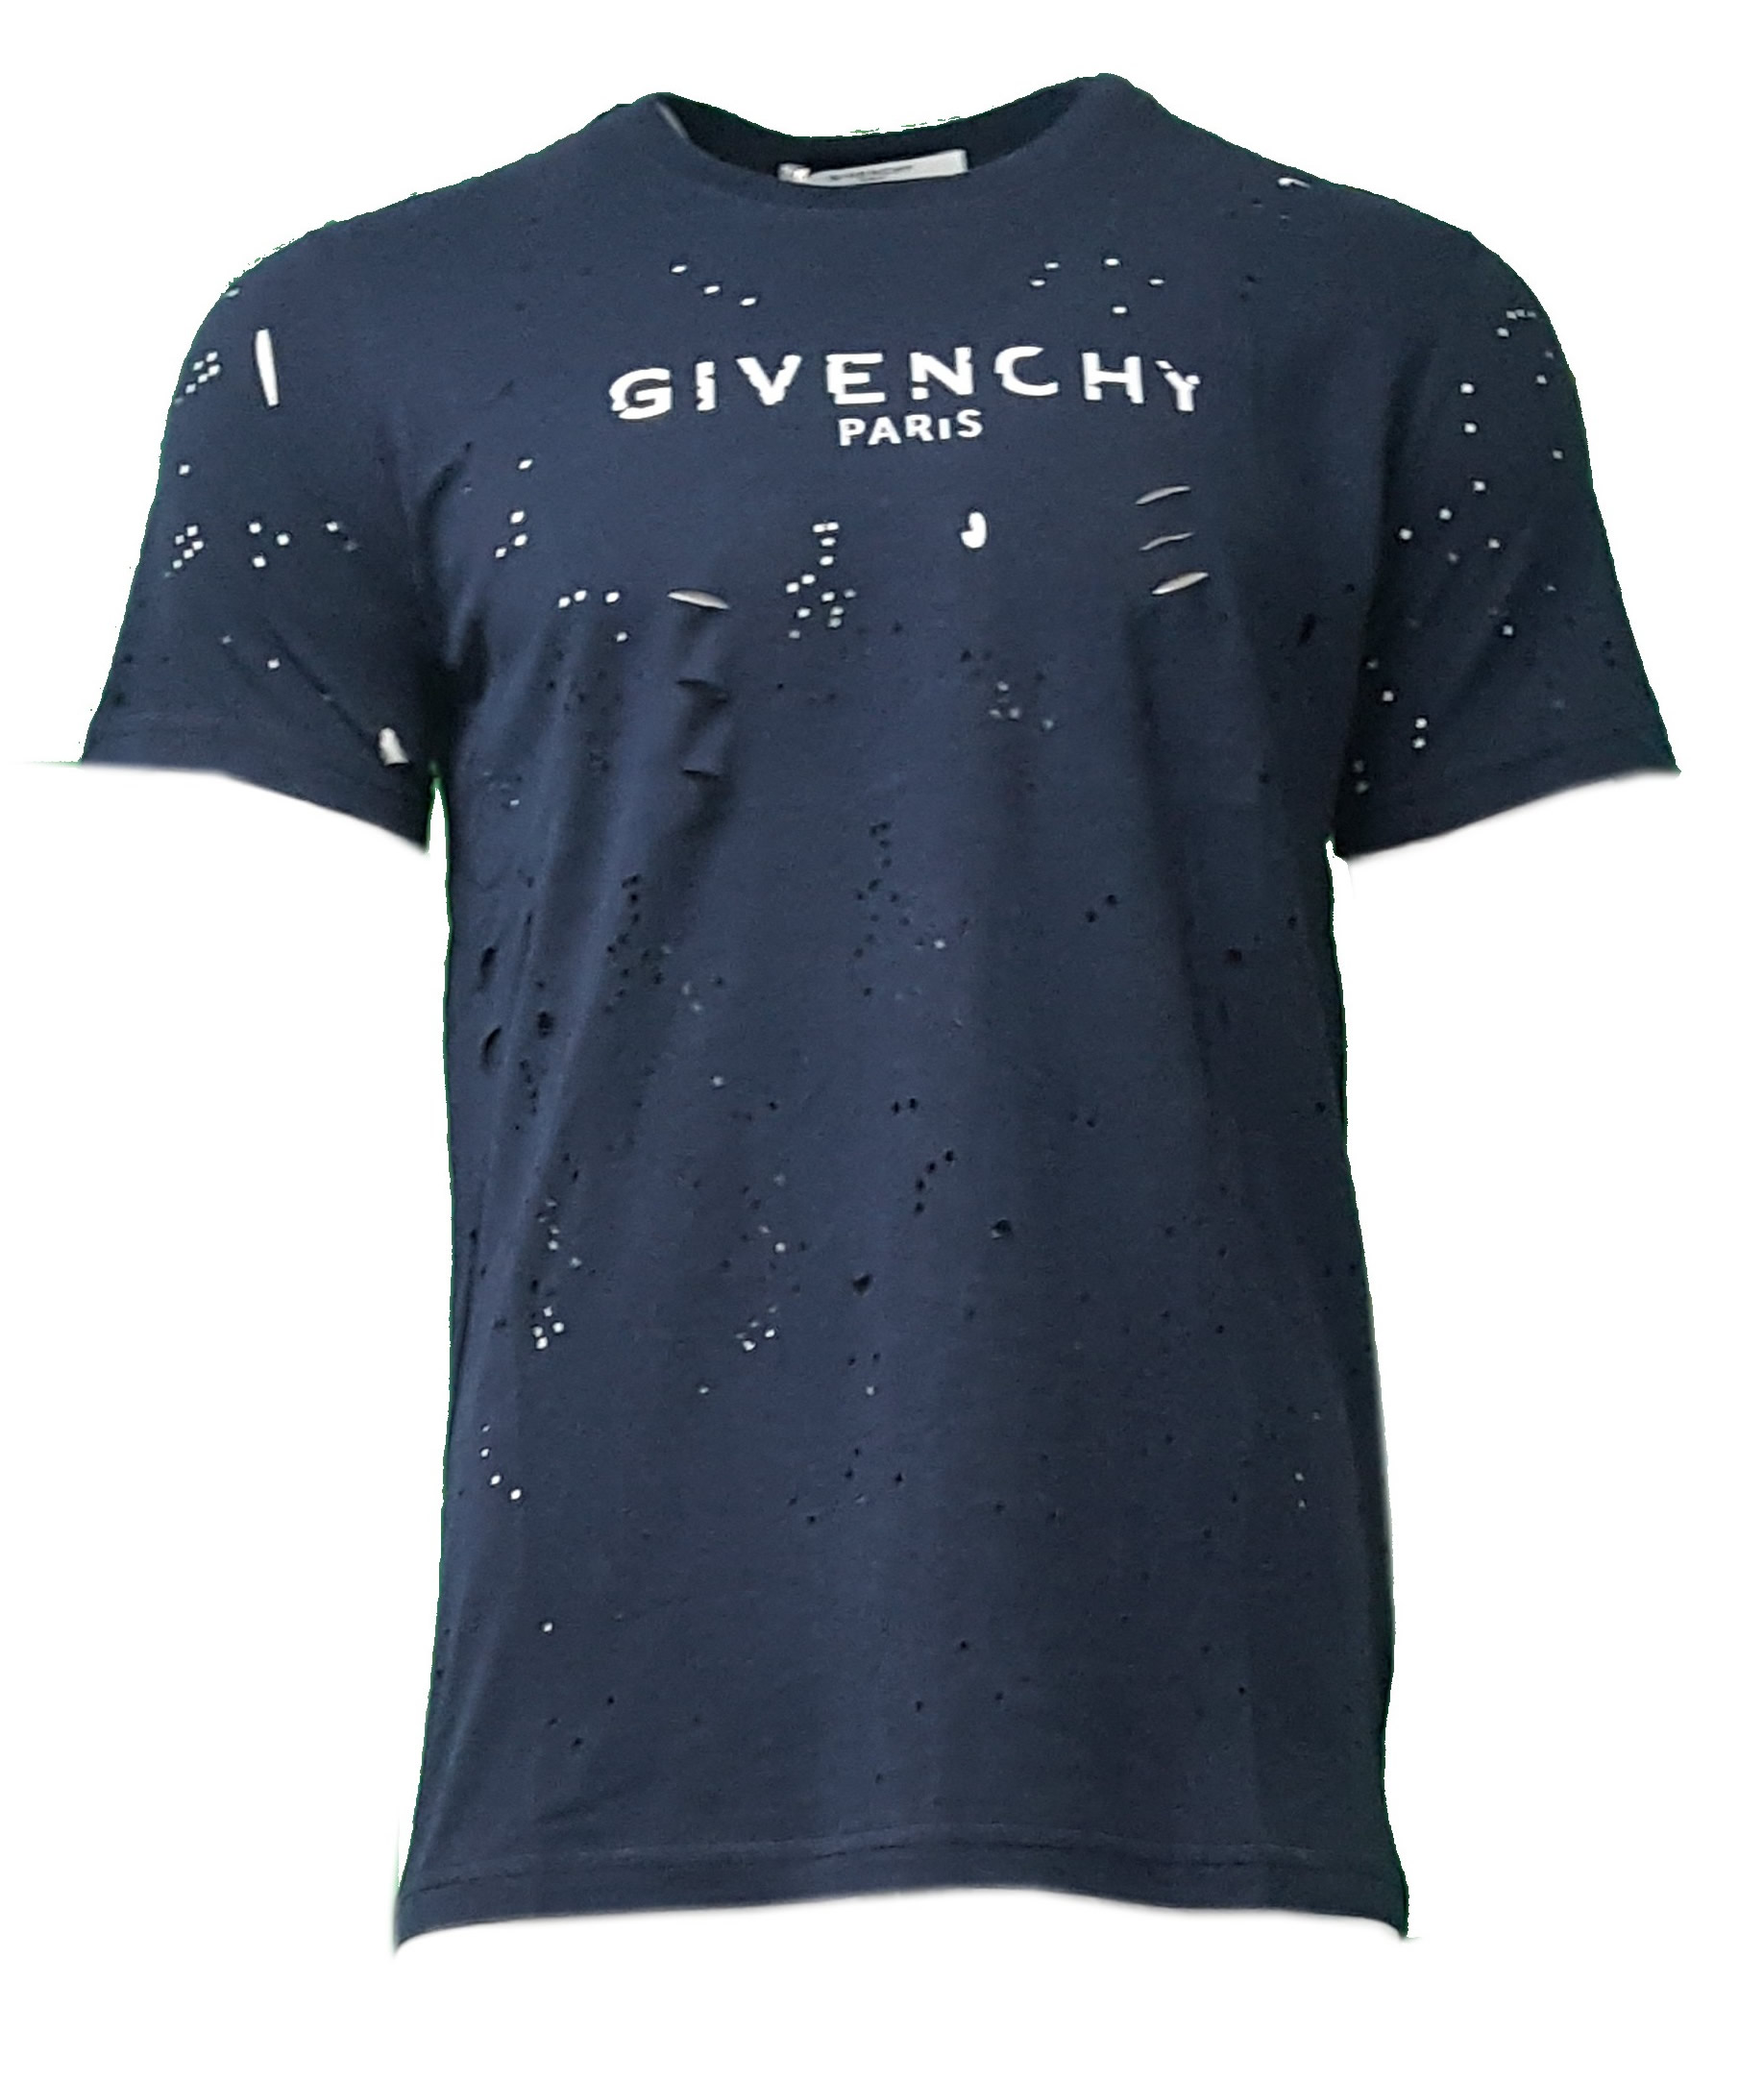 Givenchy Paris Short Sleeve Crew T 